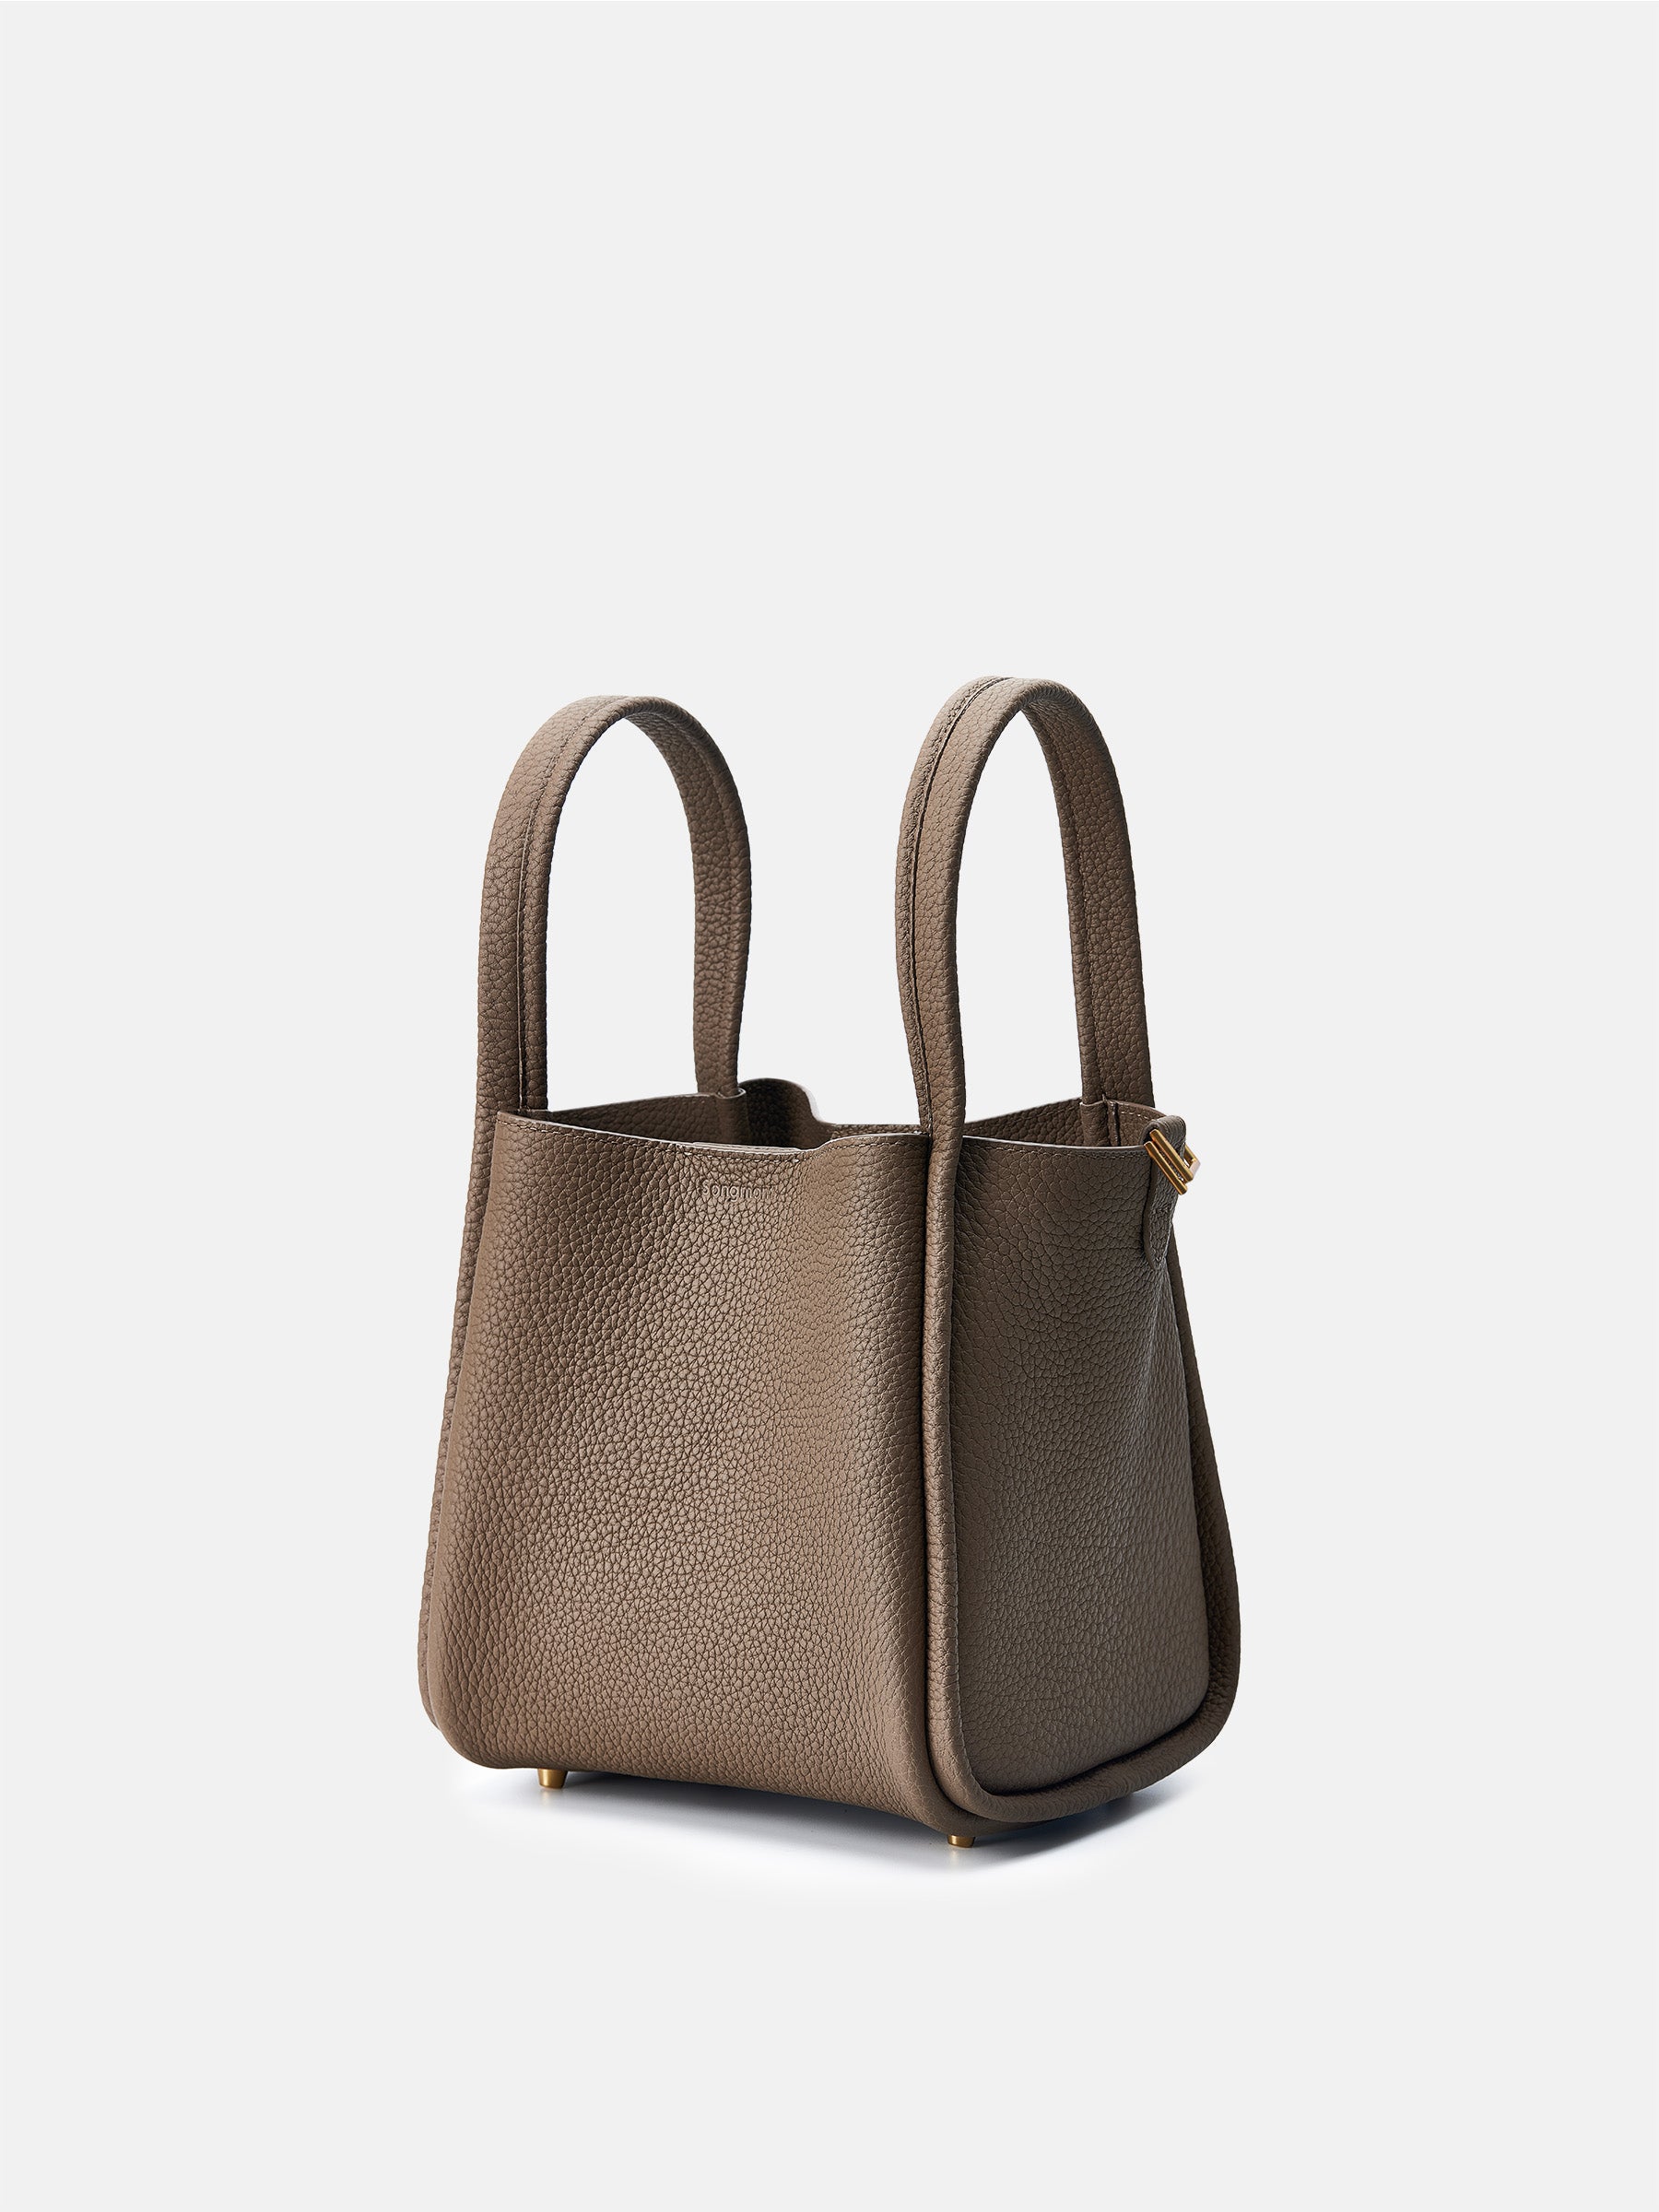 Bag Strap for Hermes Picotin/Lindy/Evelyne - Trench